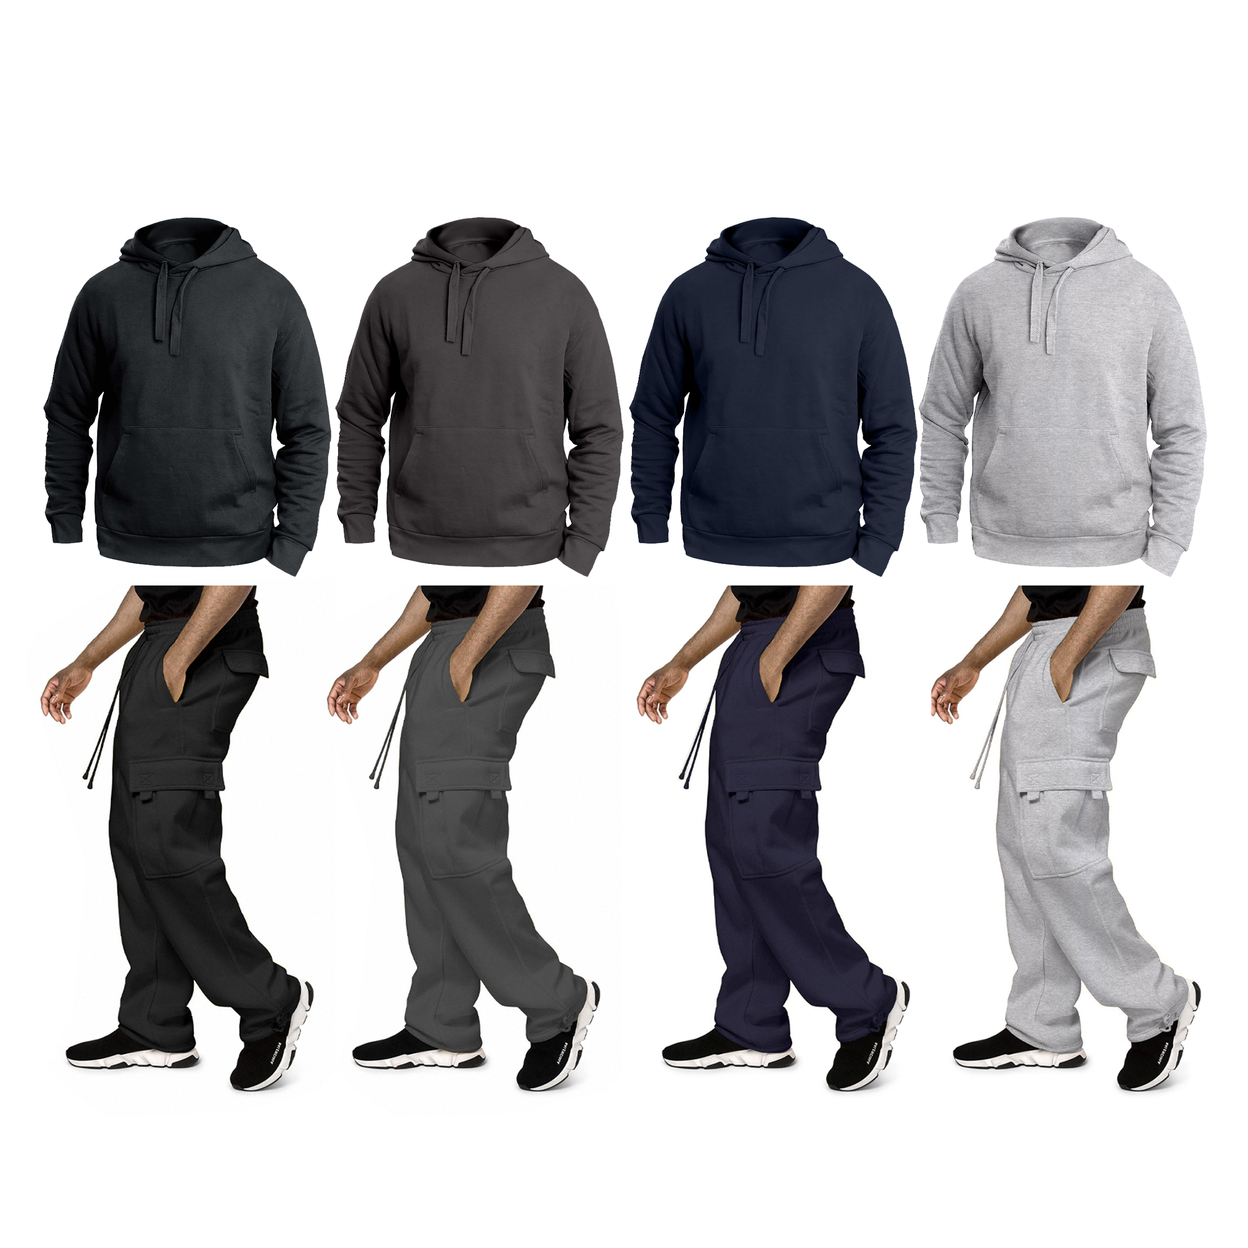 Men's Big & Tall Winter Warm Cozy Athletic Fleece Lined Multi-Pocket Cargo Sweatsuit - Charcoal, Small